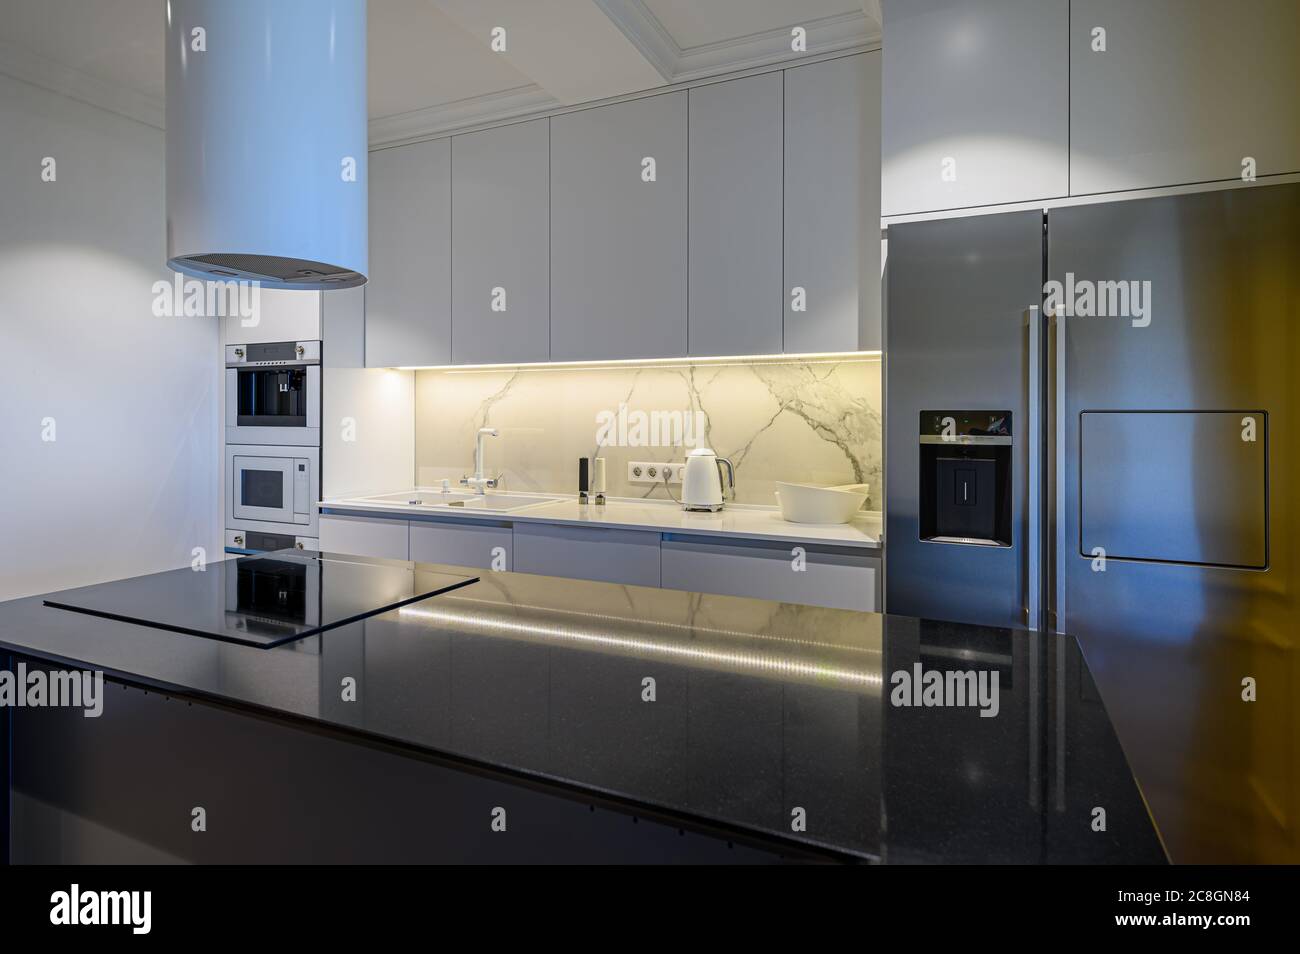 Luxury kitchen Interior with minimalism design Stock Photo